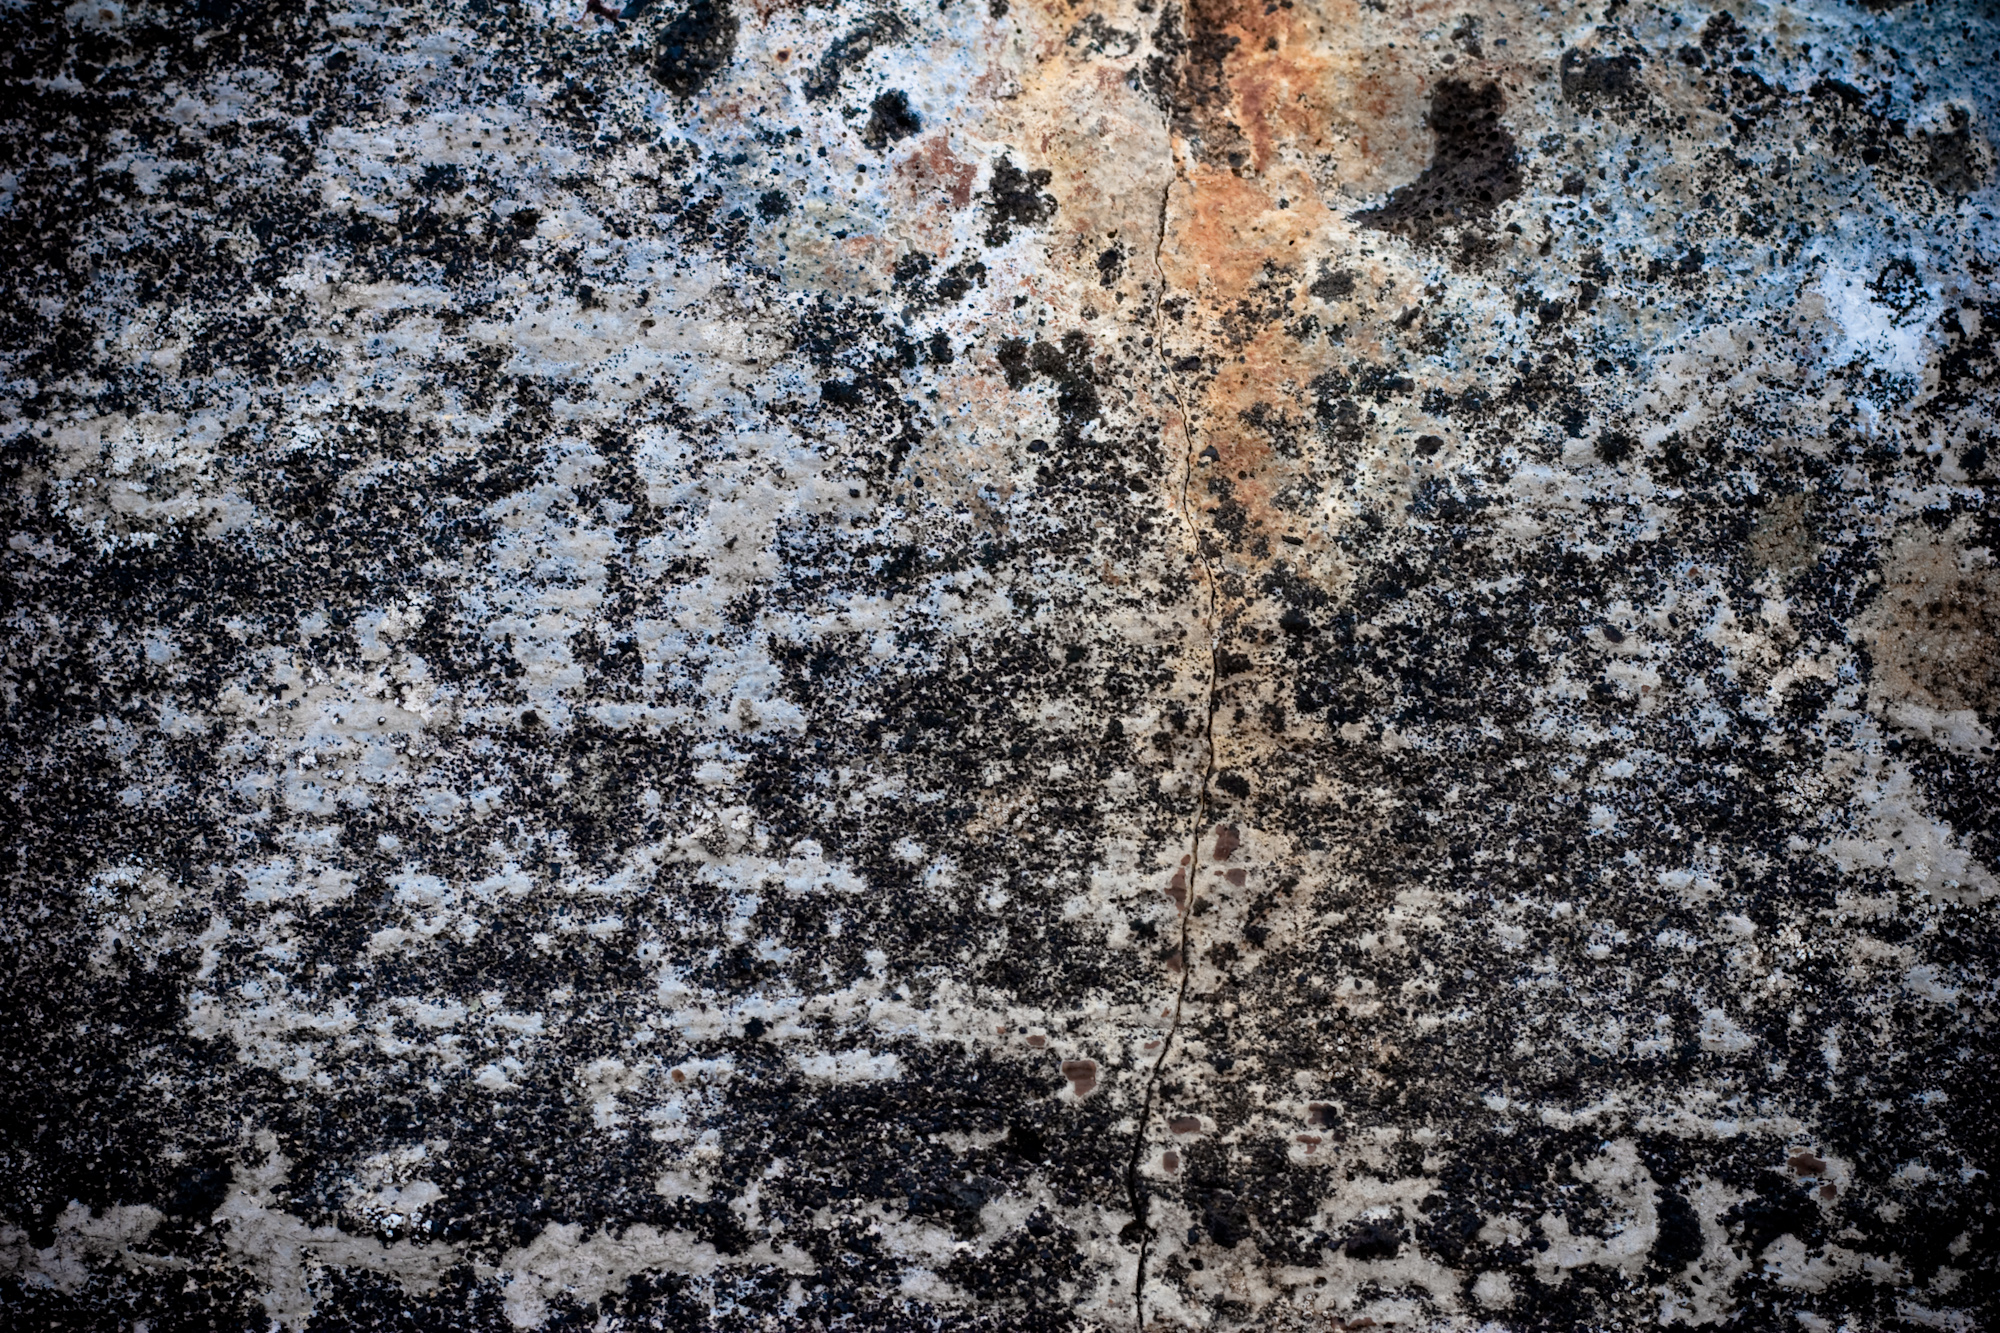 Worn concrete texture photo